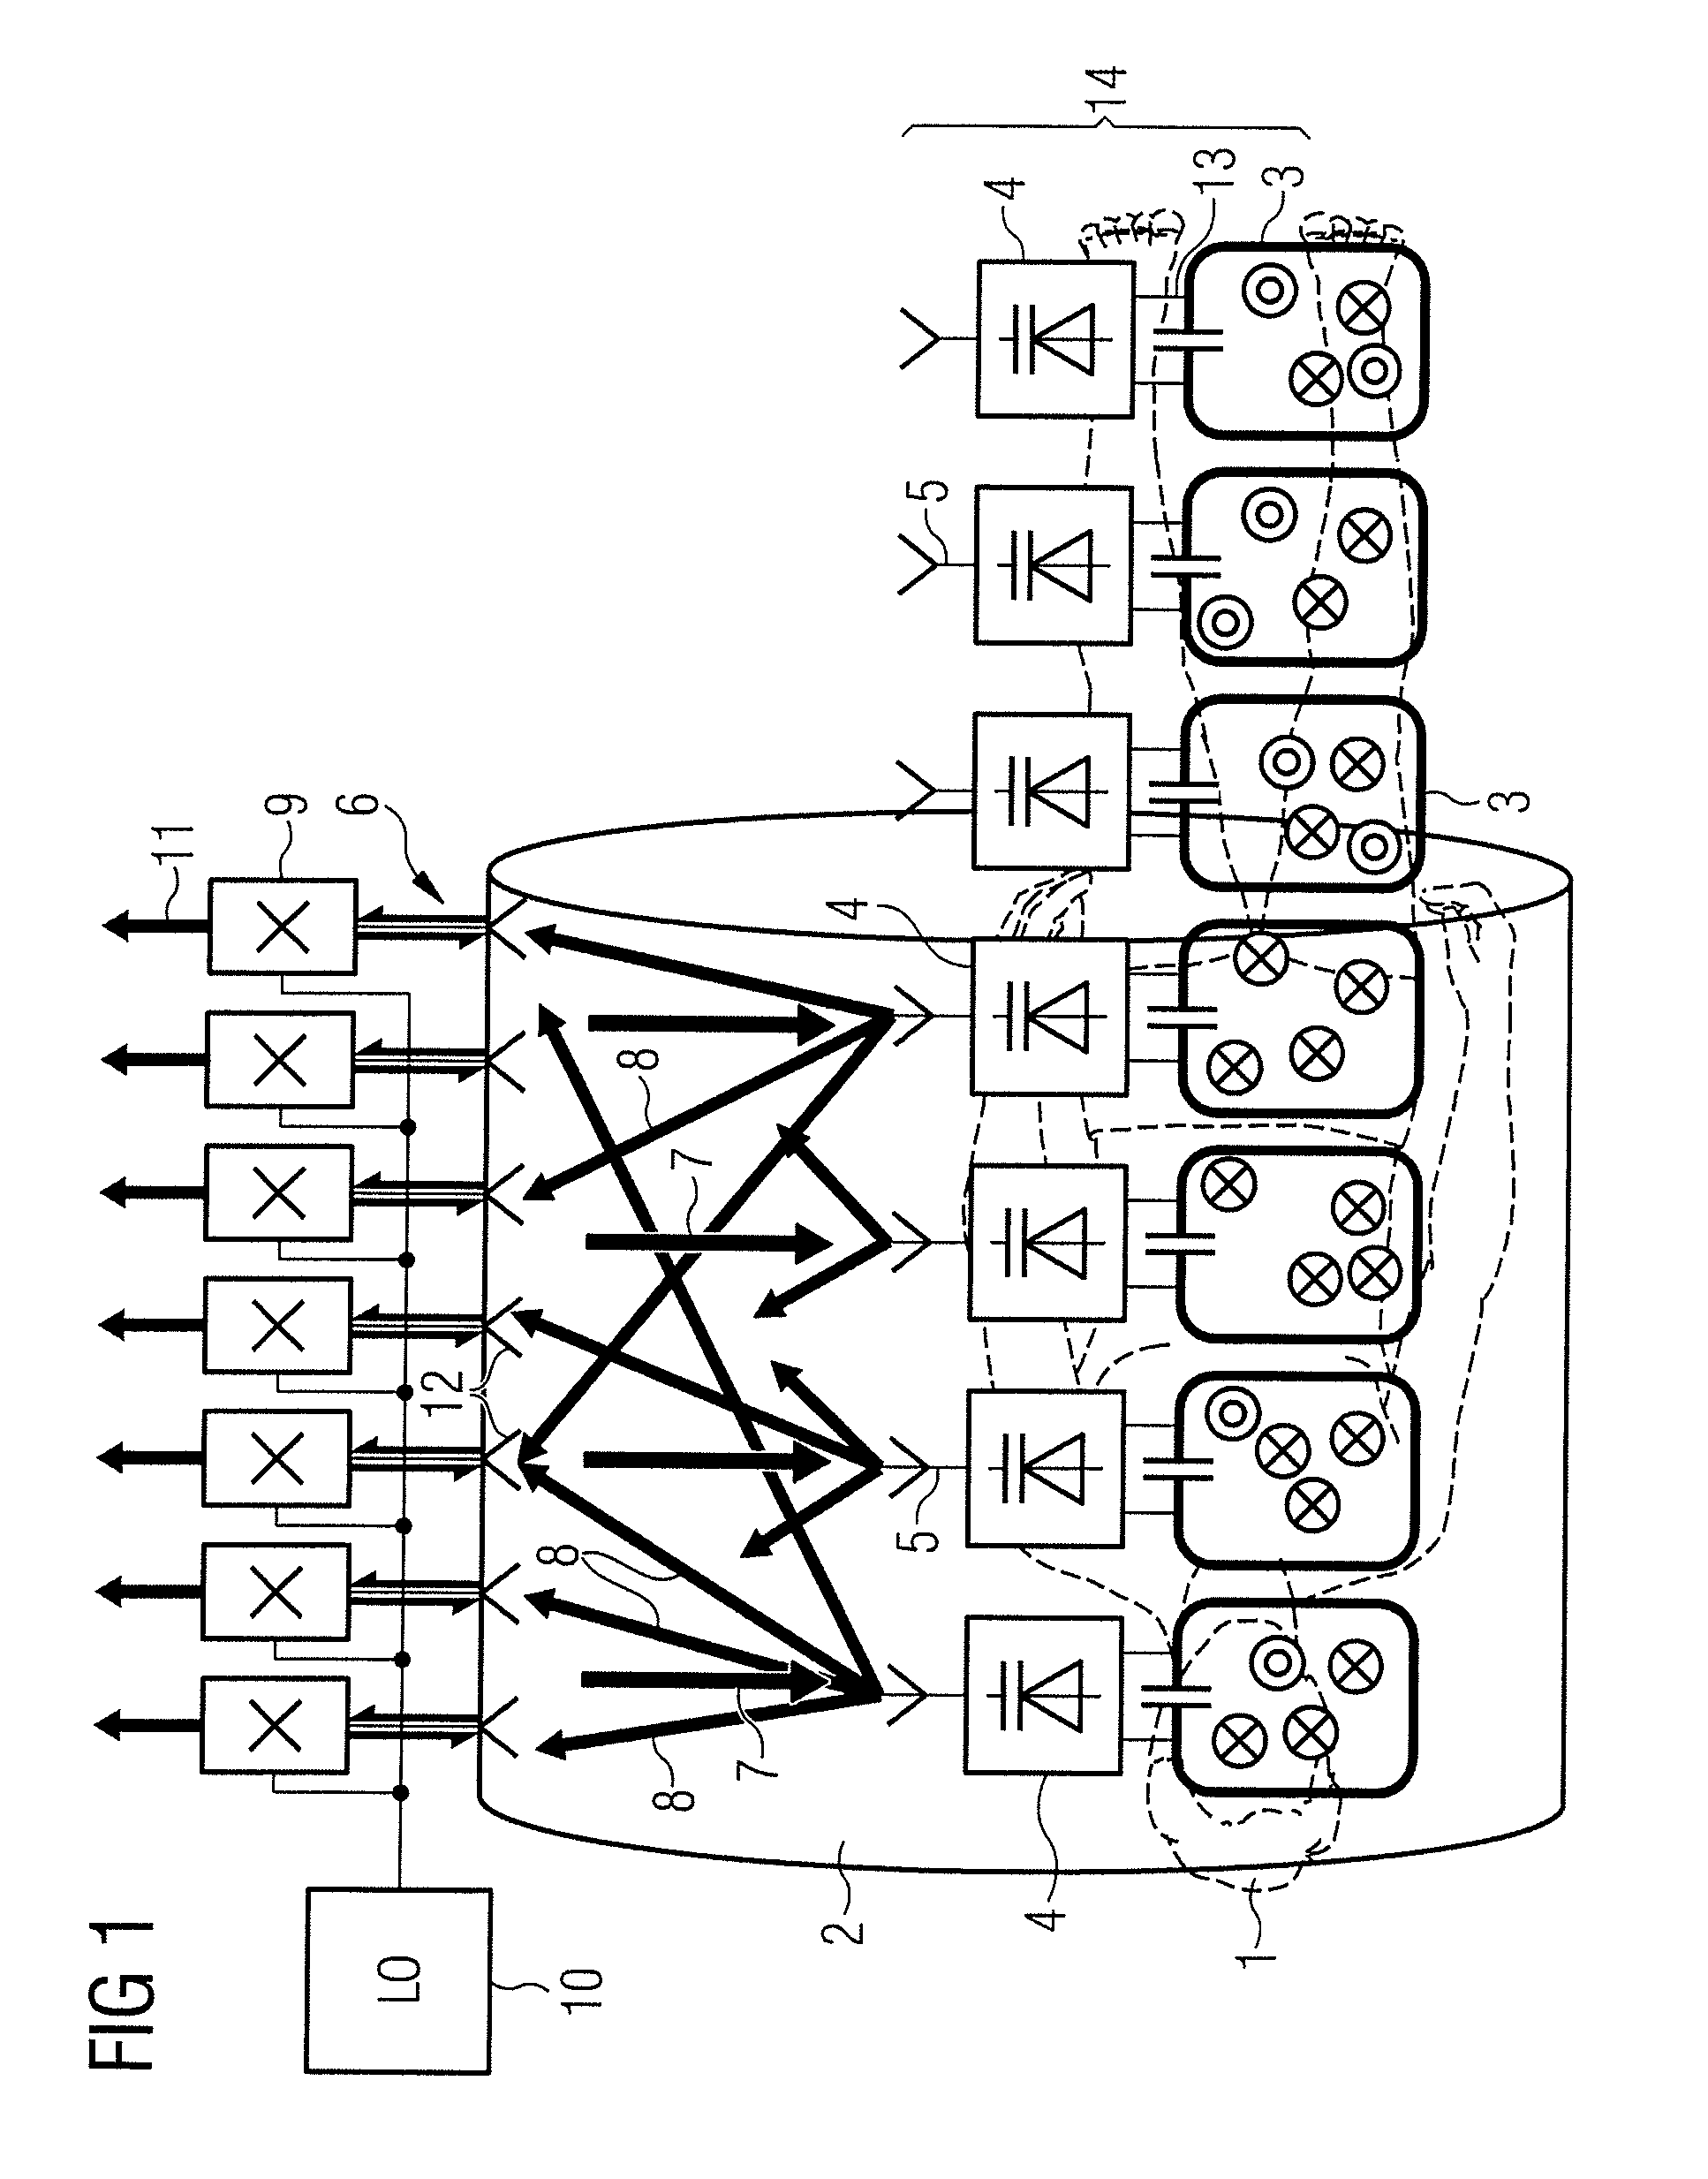 Parametric amplifier device